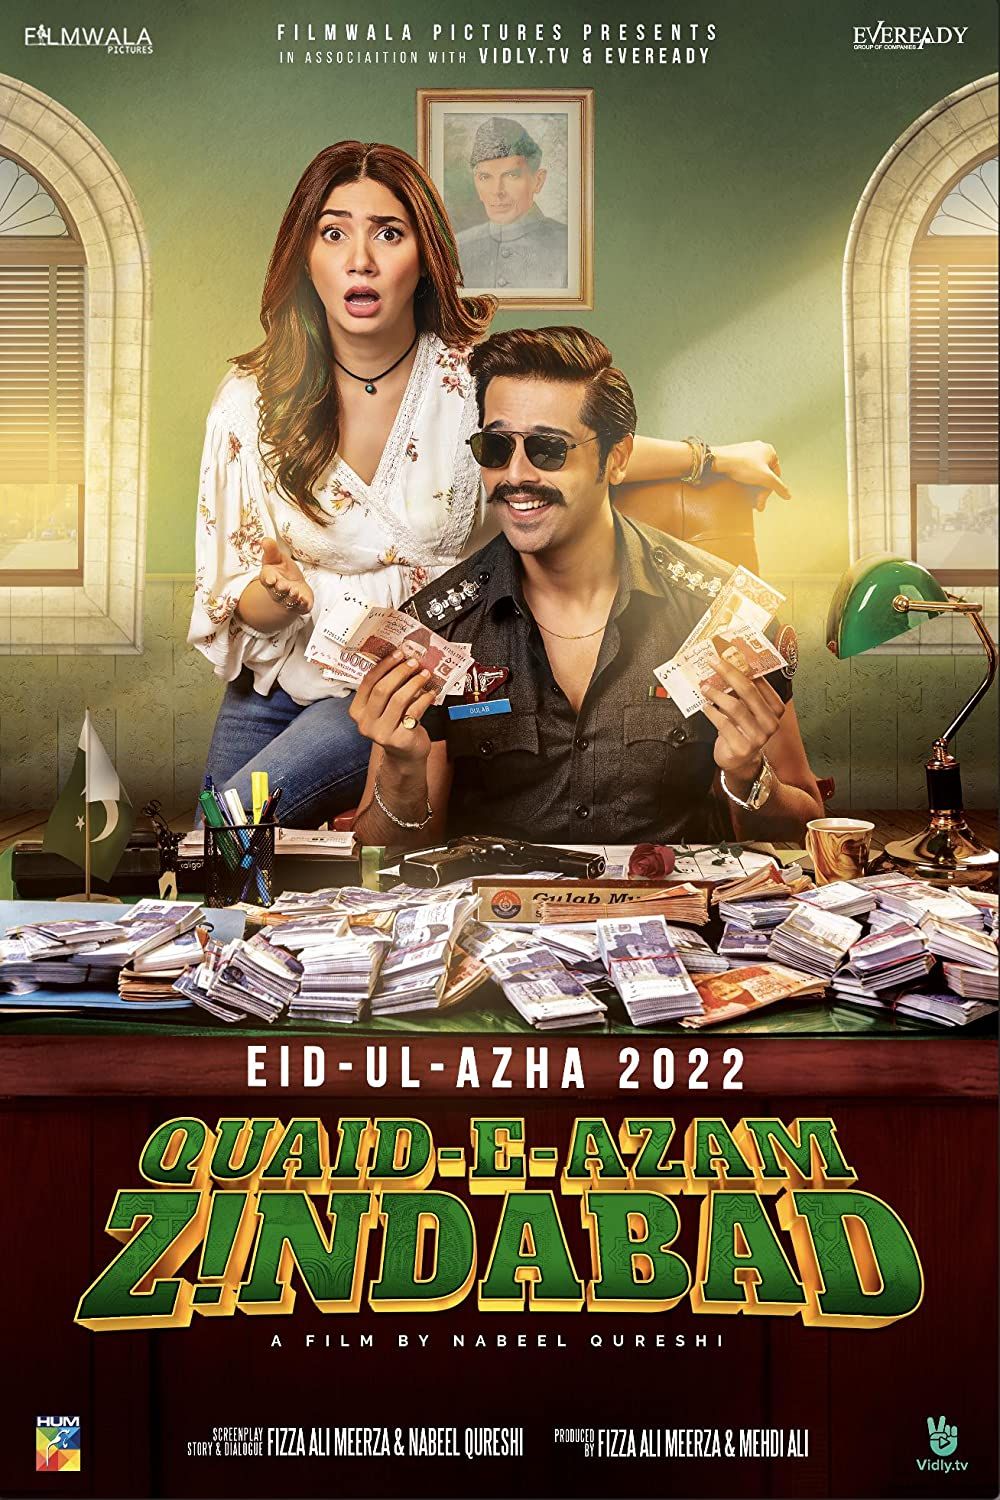 Quaid-e-Azam Zindabad (2022) Urdu PreDVDRip download full movie